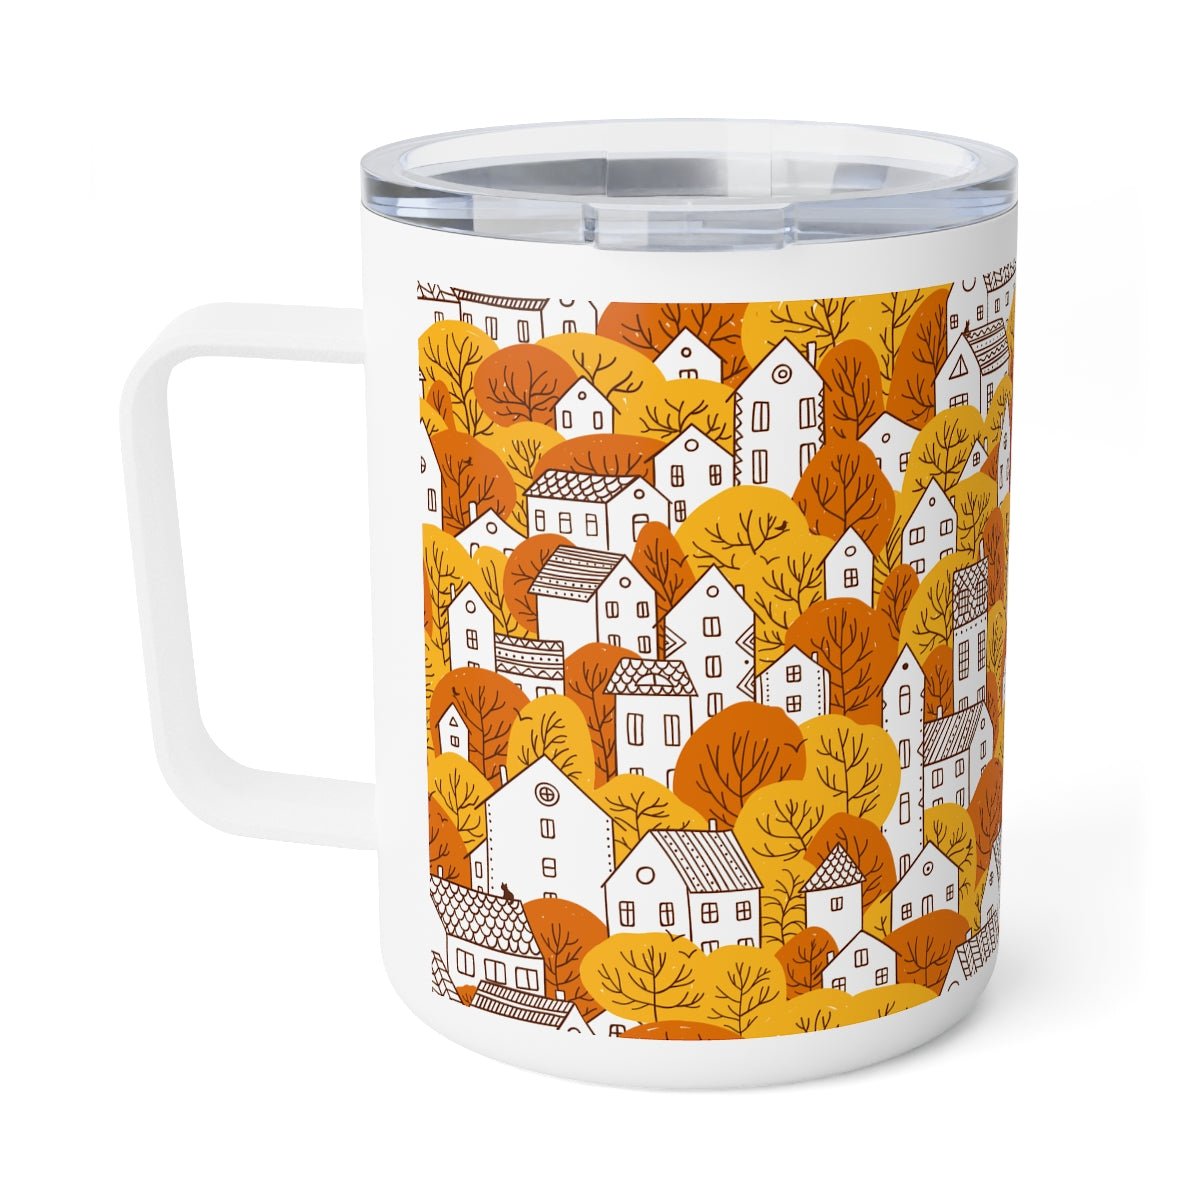 Fall Nordic Houses Insulated Coffee Mug, 10oz - Puffin Lime